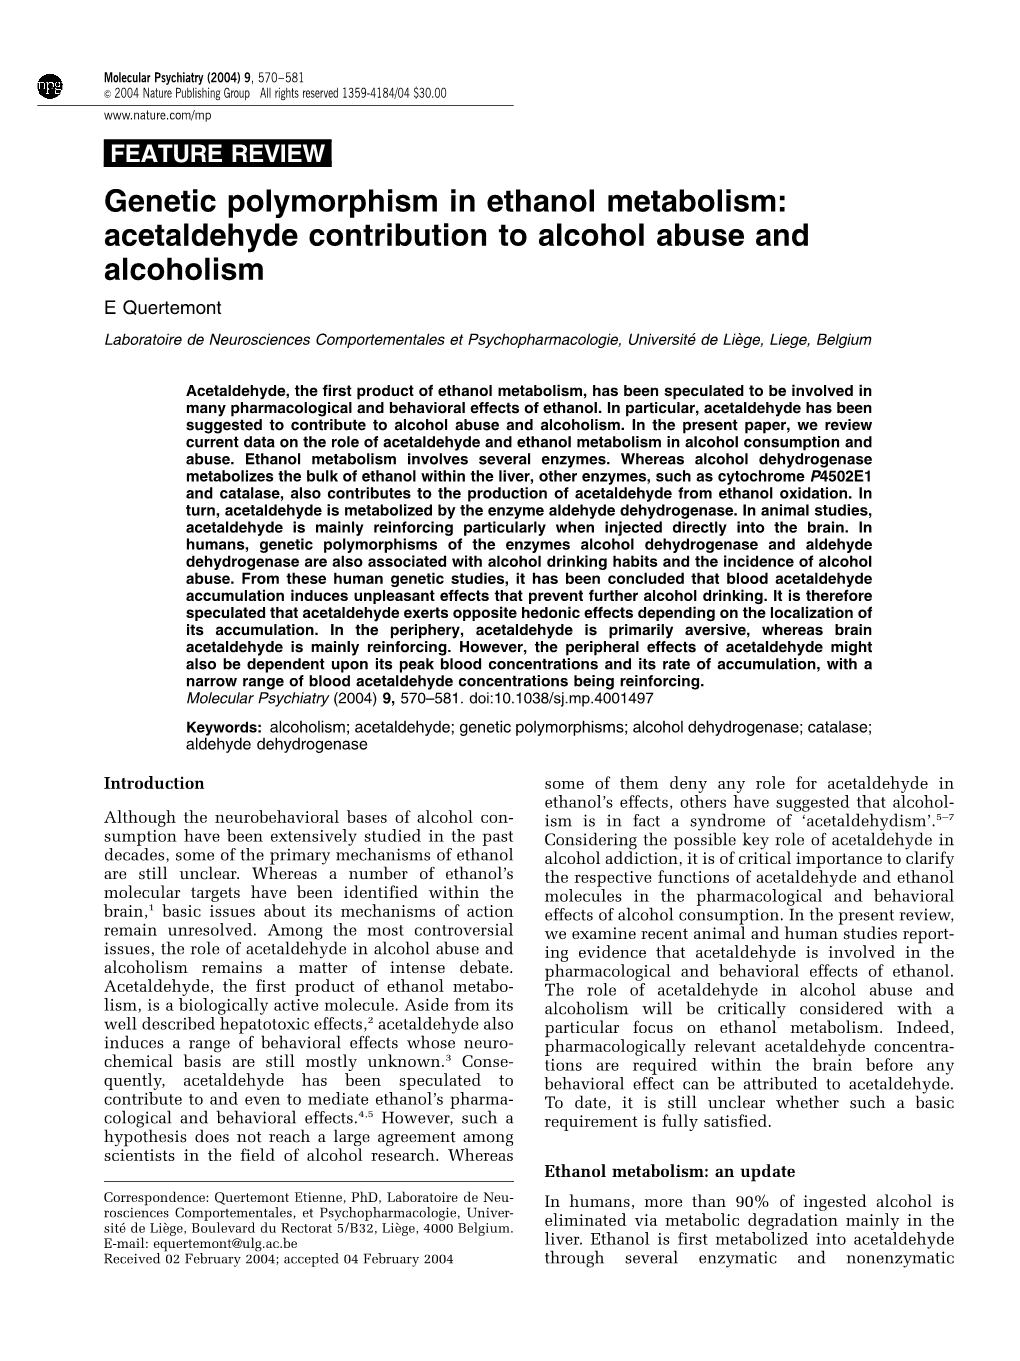 Genetic Polymorphism in Ethanol Metabolism: Acetaldehyde